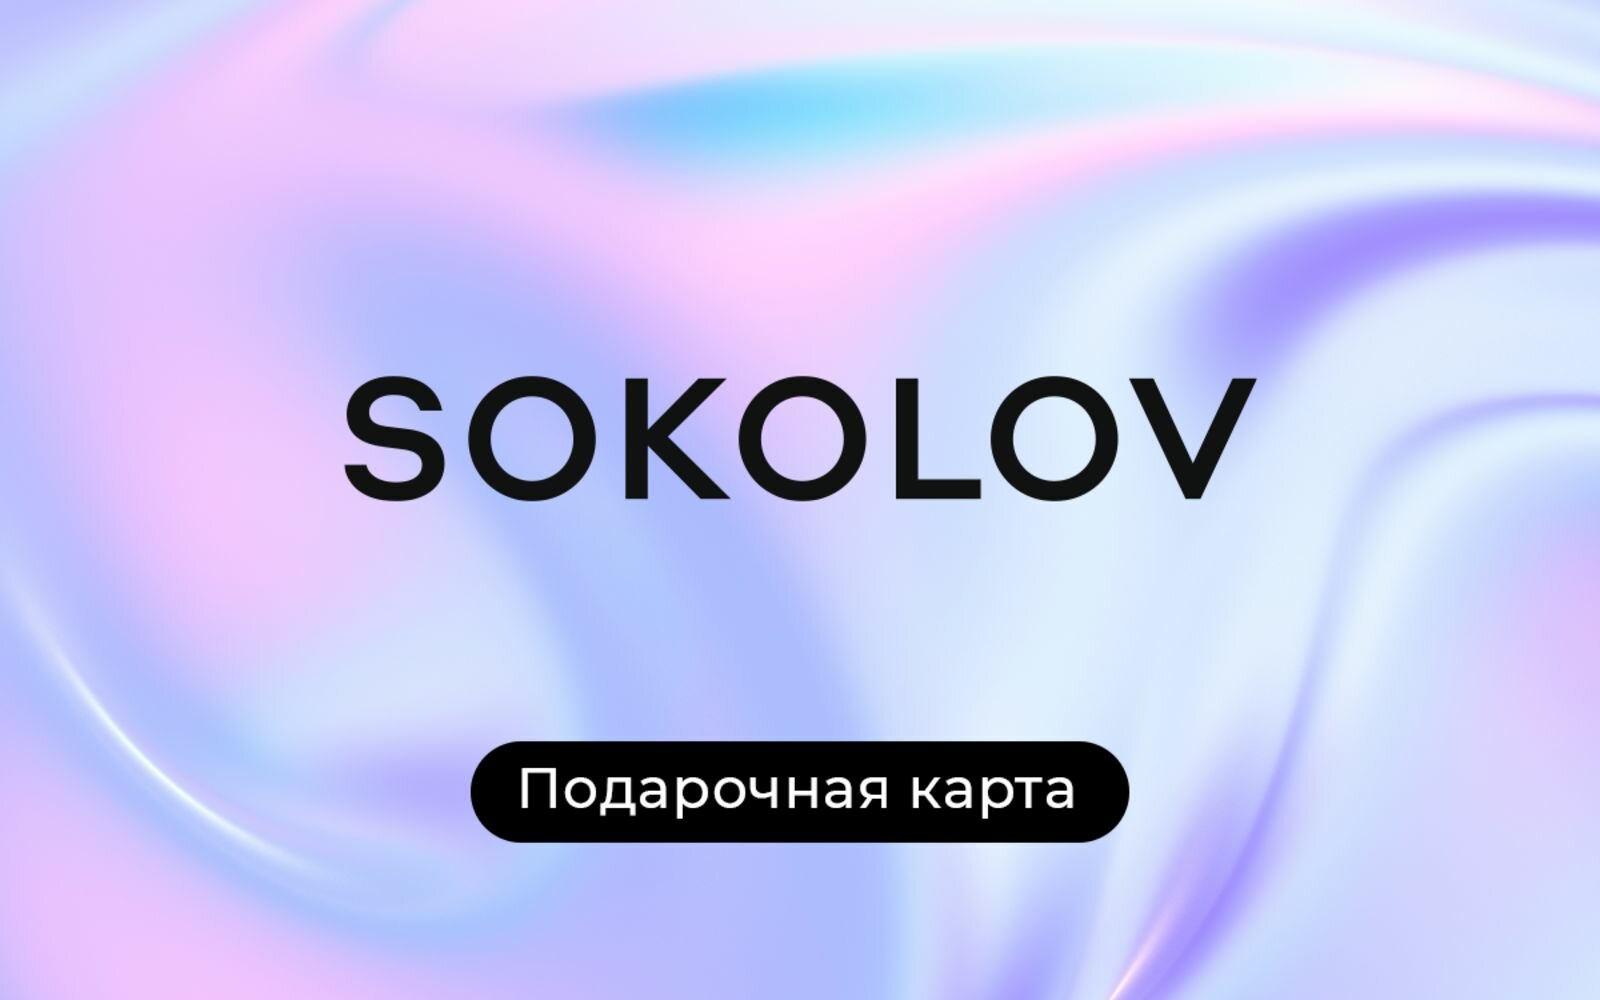 Подарочная карта SOKOLOV на 15 000 рублей